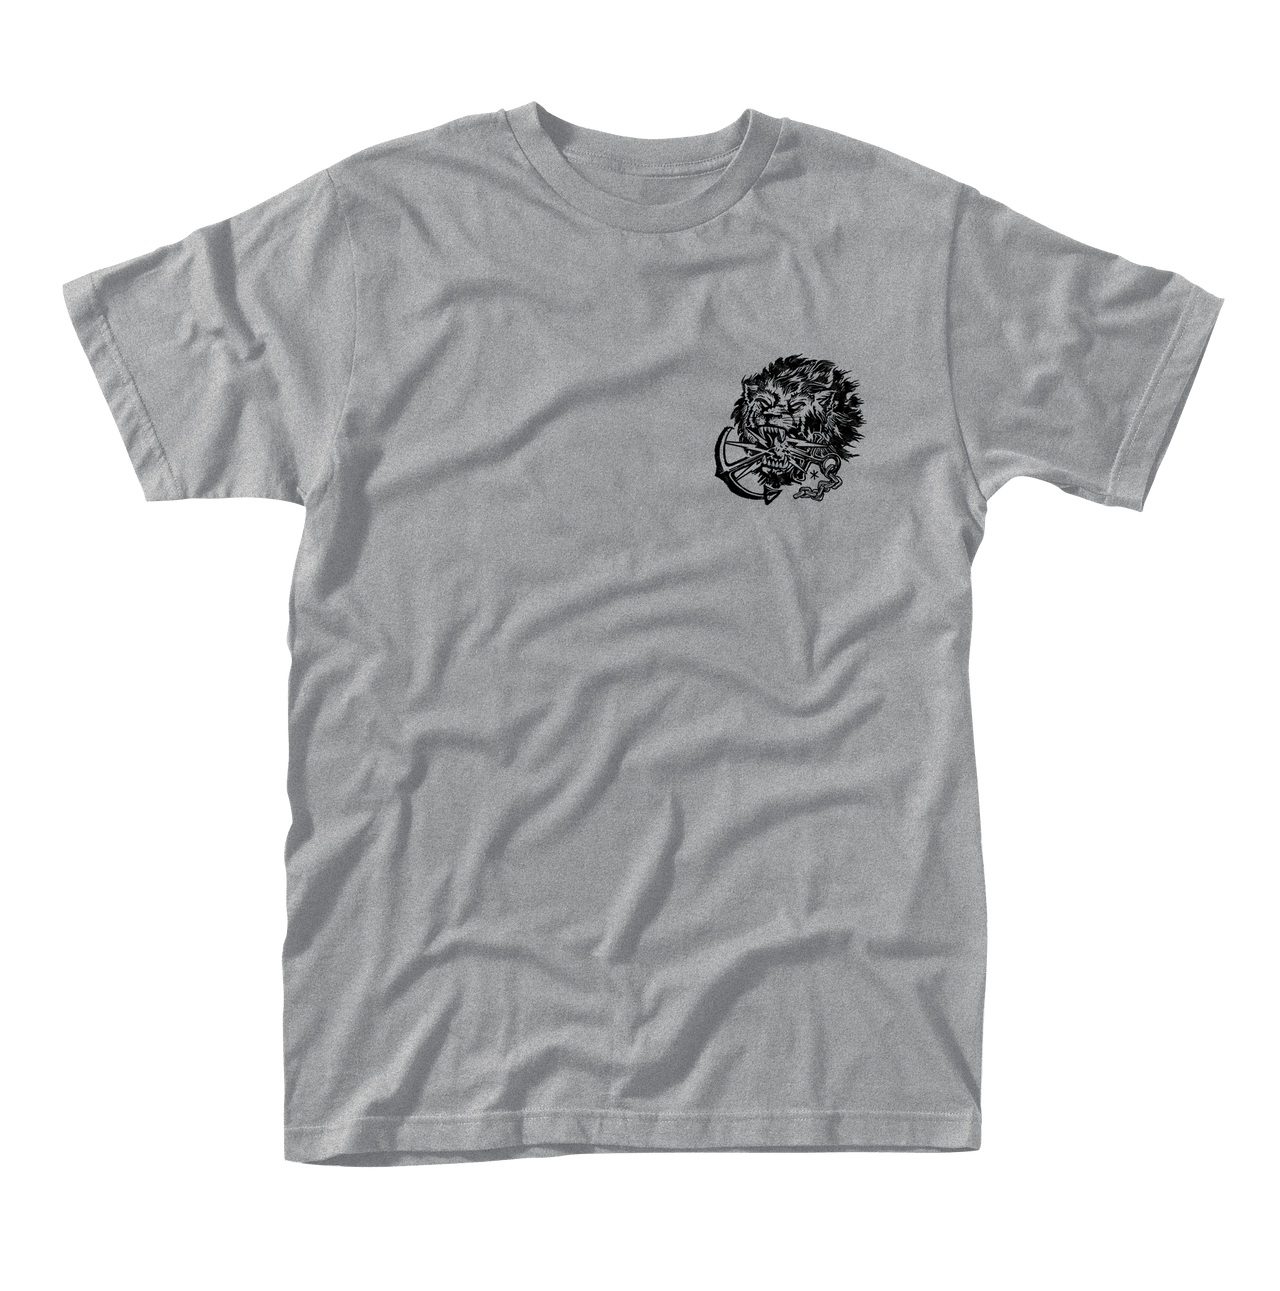 HO Sports Syndicate Wildcat T-Shirt - Gray | 2021